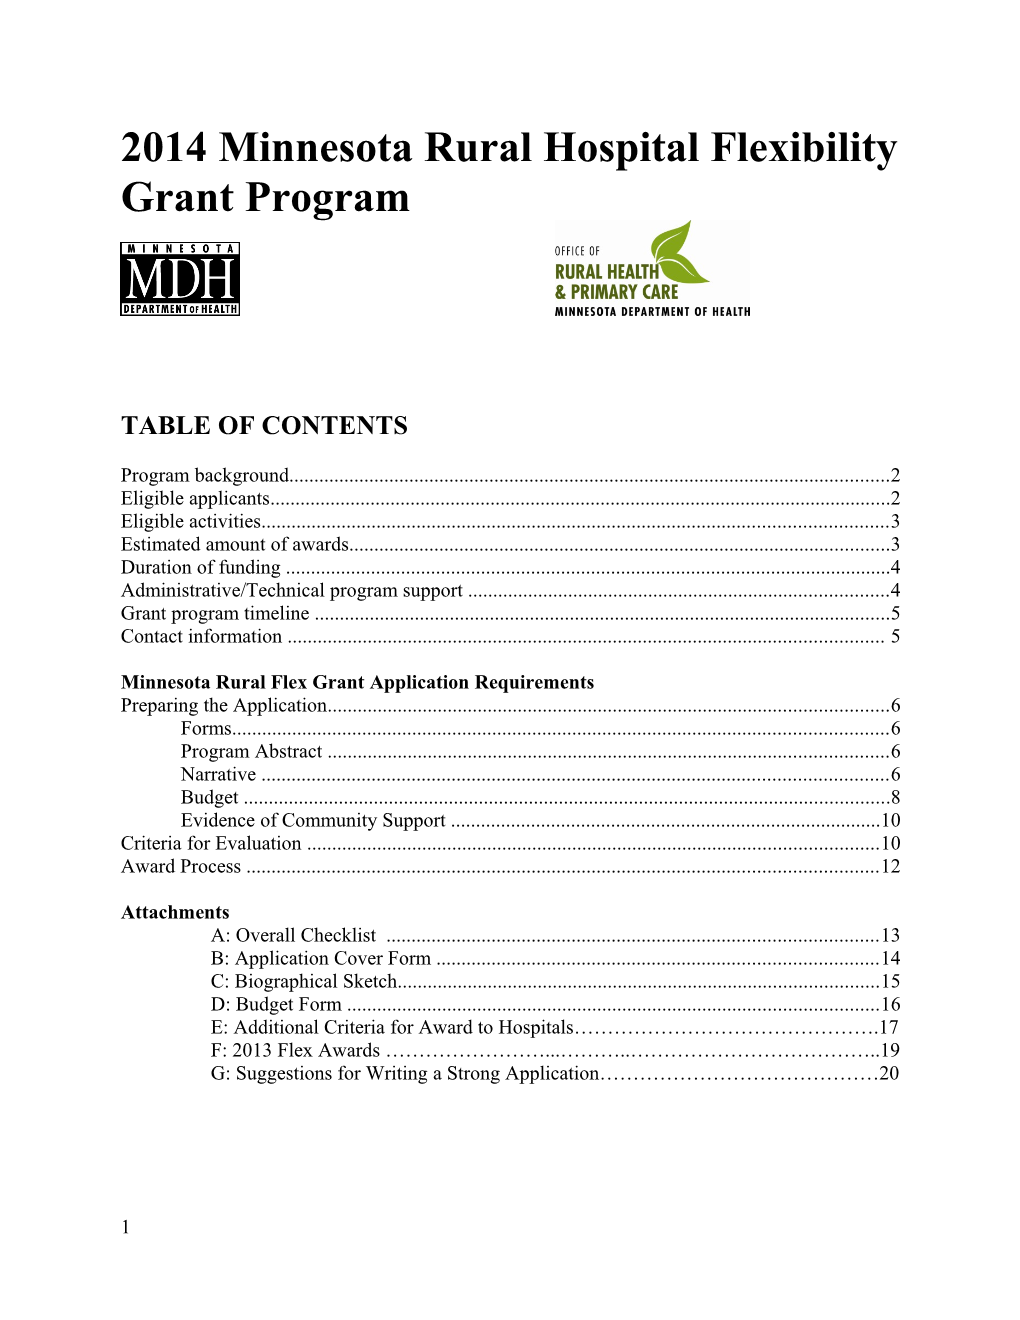 2014 Minnesota Rural Hospital Flexibility Grant Program